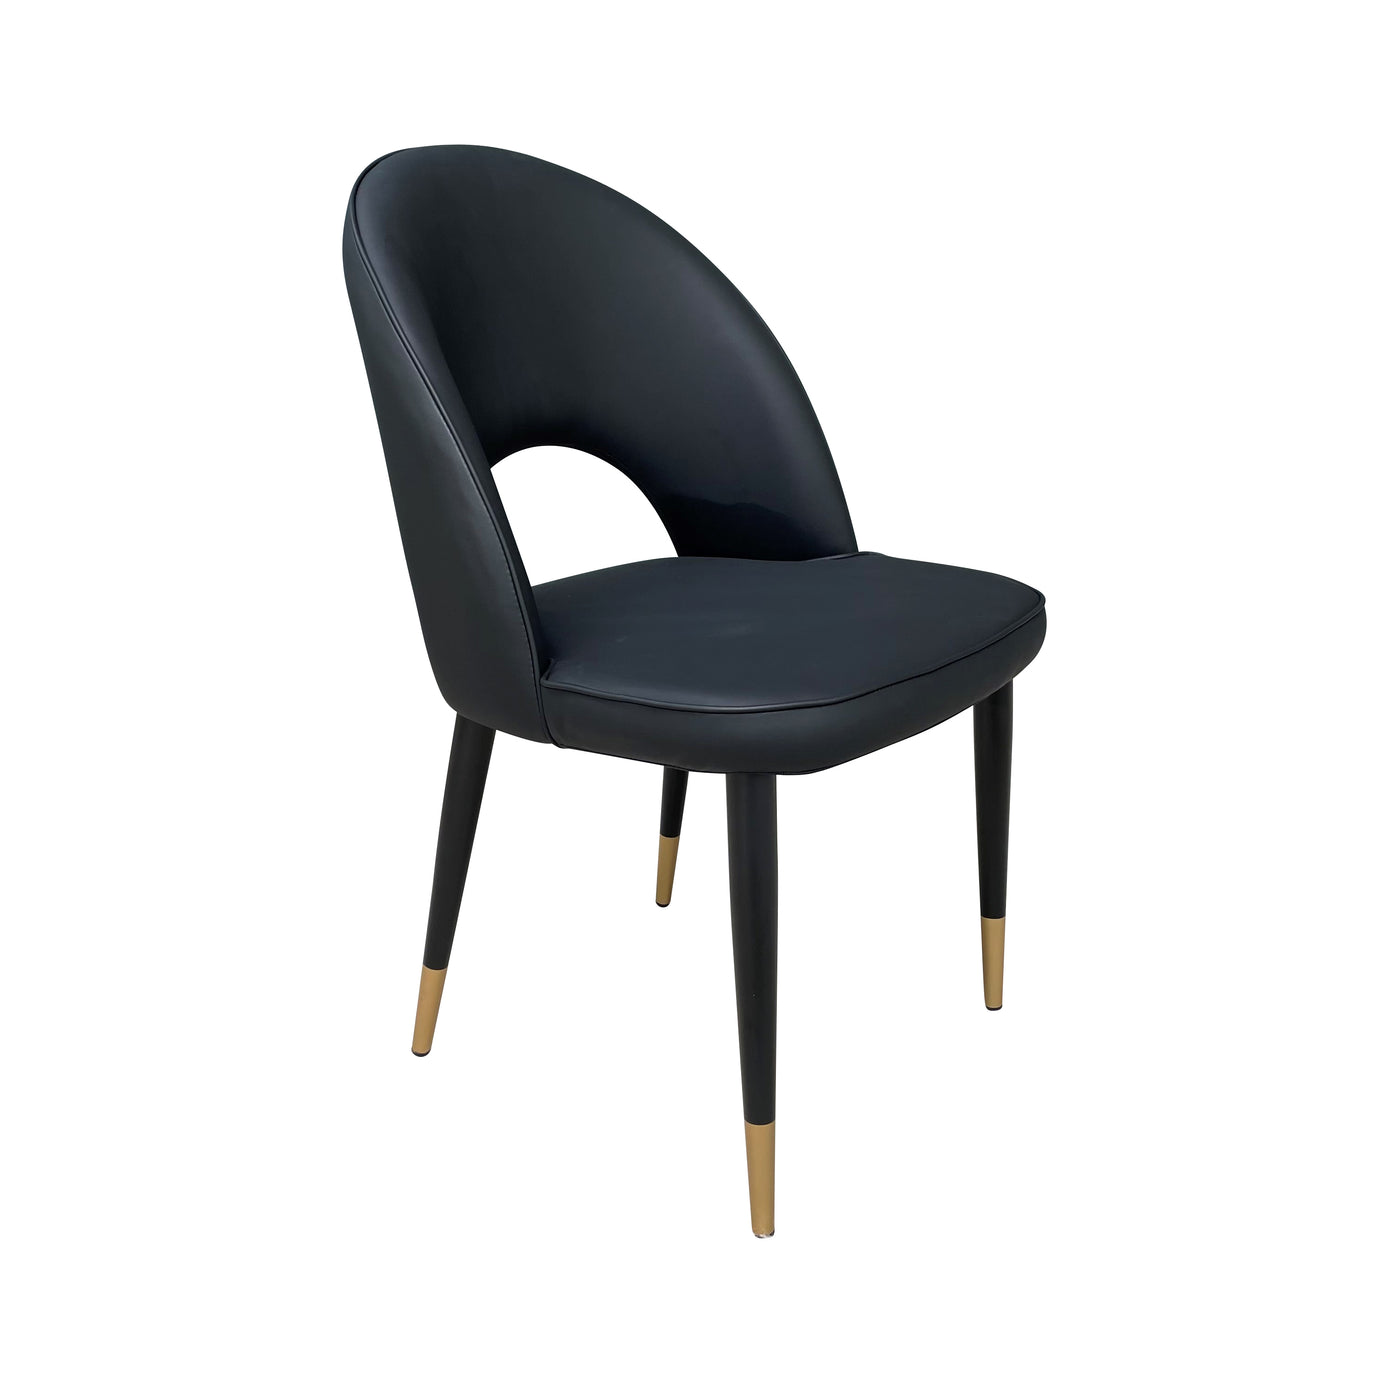 Bourdain Dining Chair Black Leather Look